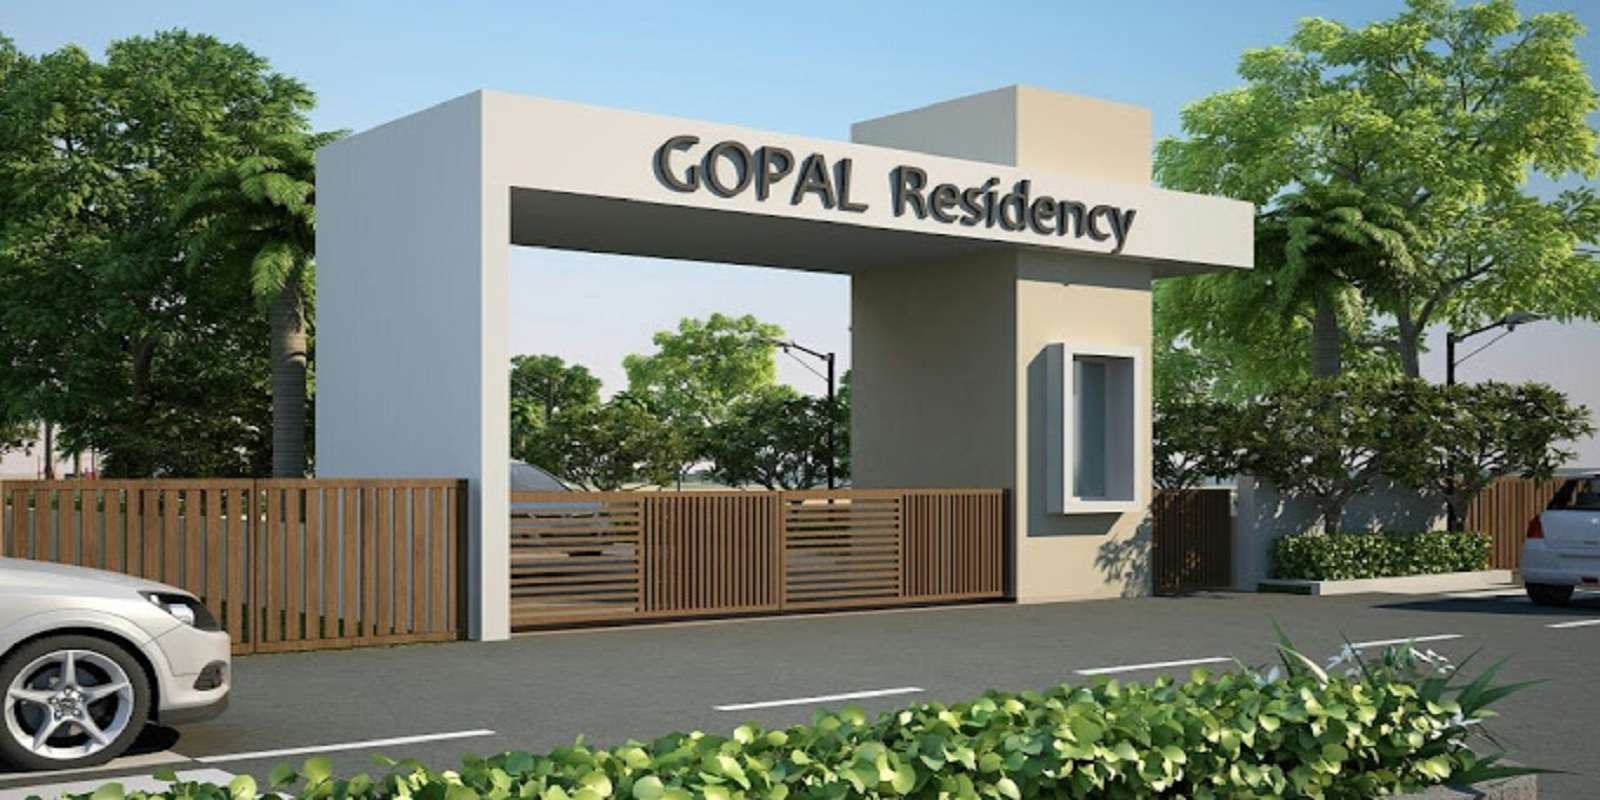 Gopal Residency Plots Cover Image